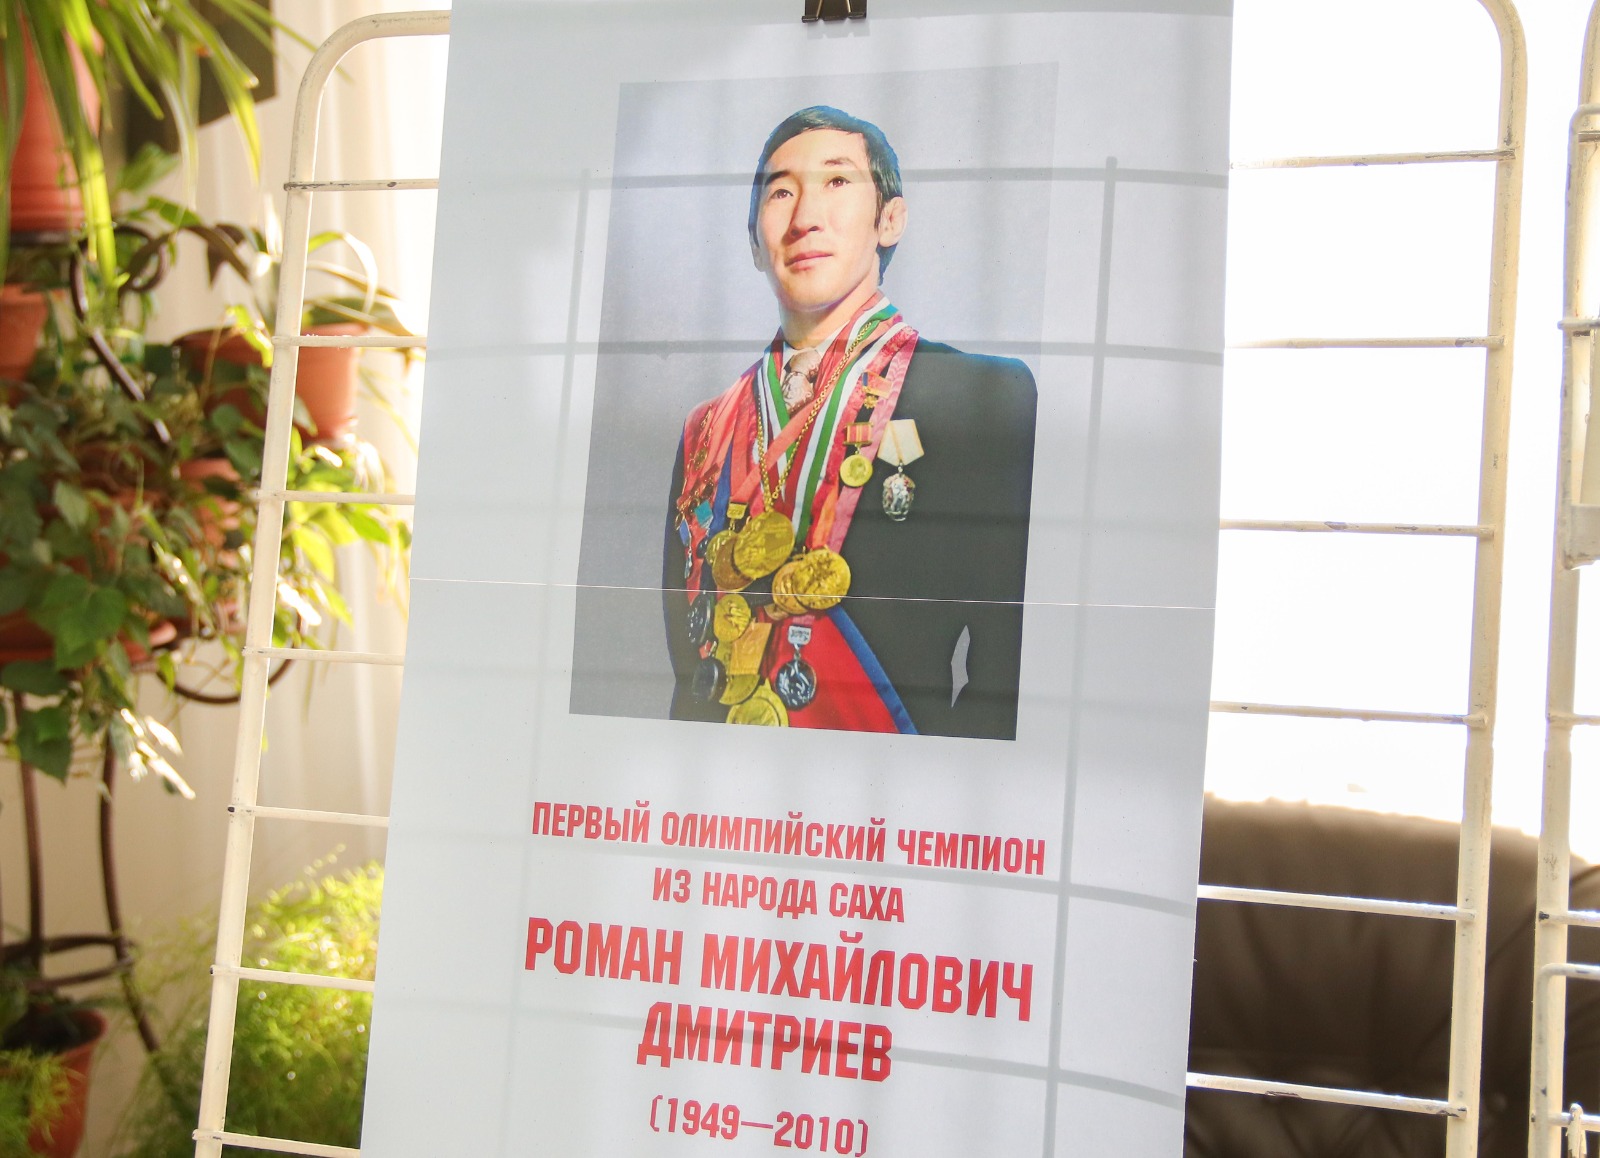 75 юбилей олимпийского чемпиона Романа Дмитриева широко отметят в Якутии